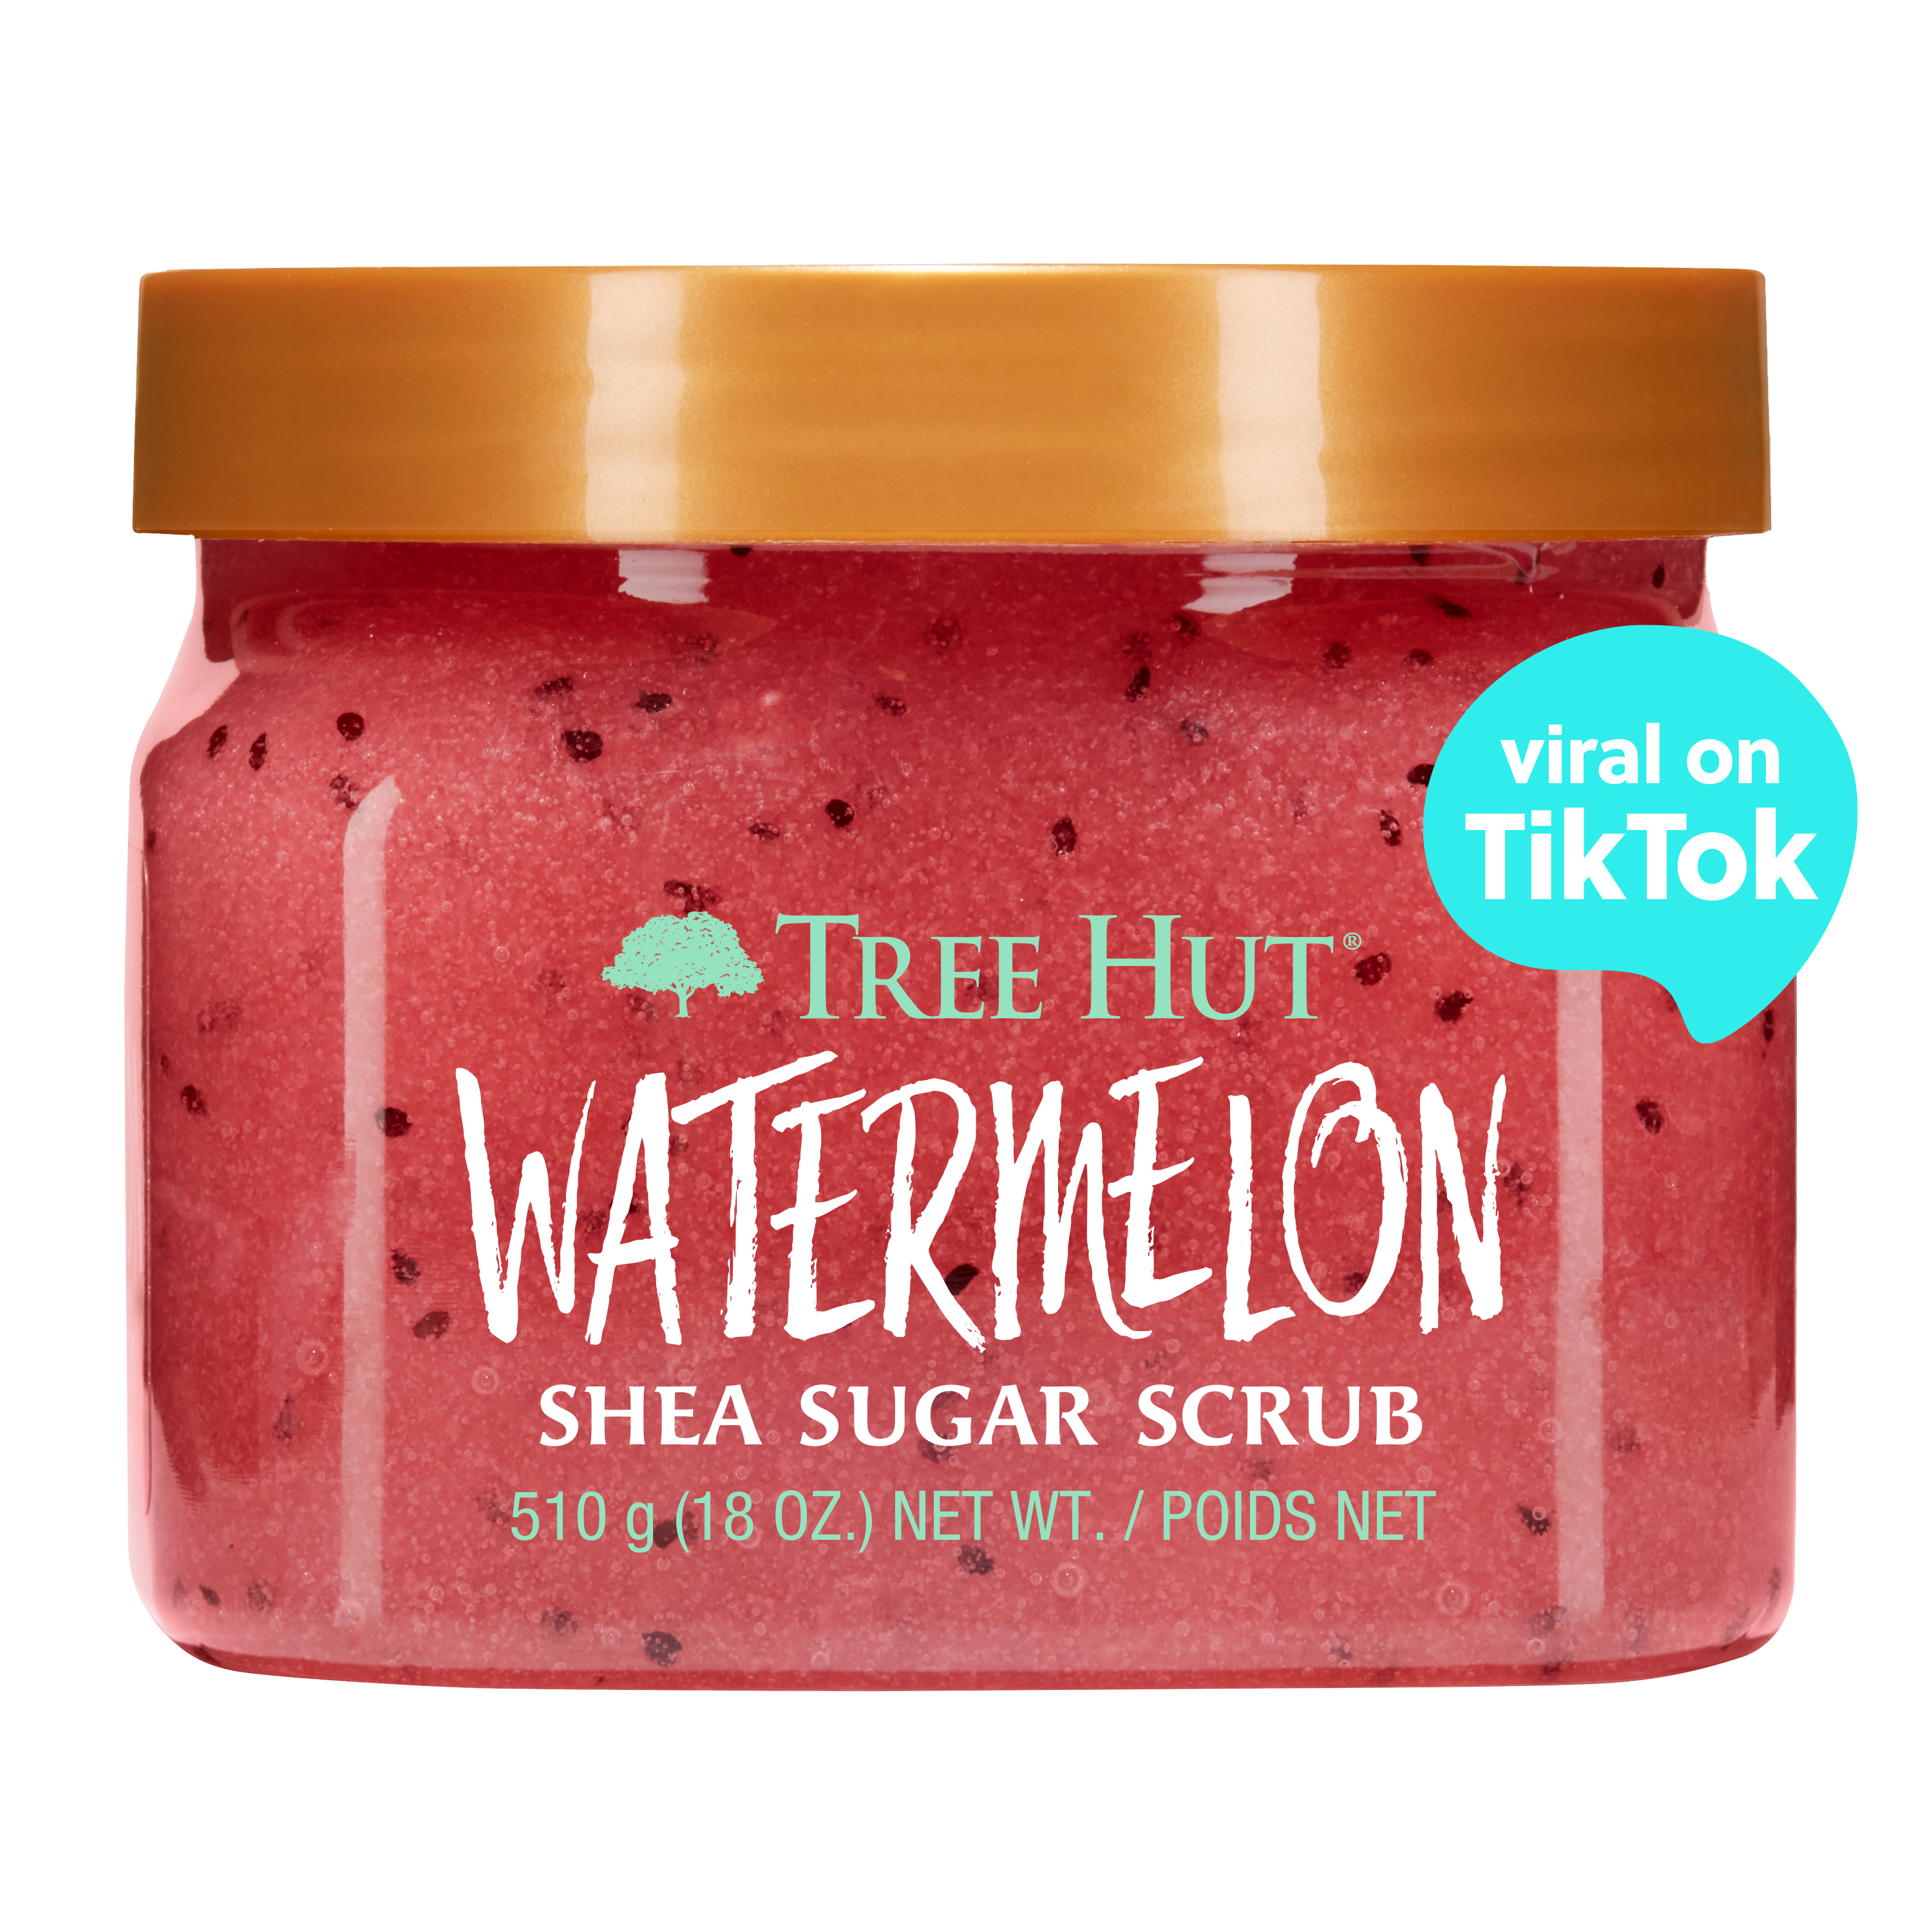 Tree Hut Watermelon Shea Sugar Exfoliating and Hydrating Body Scrub, 18 oz. - image 1 of 3